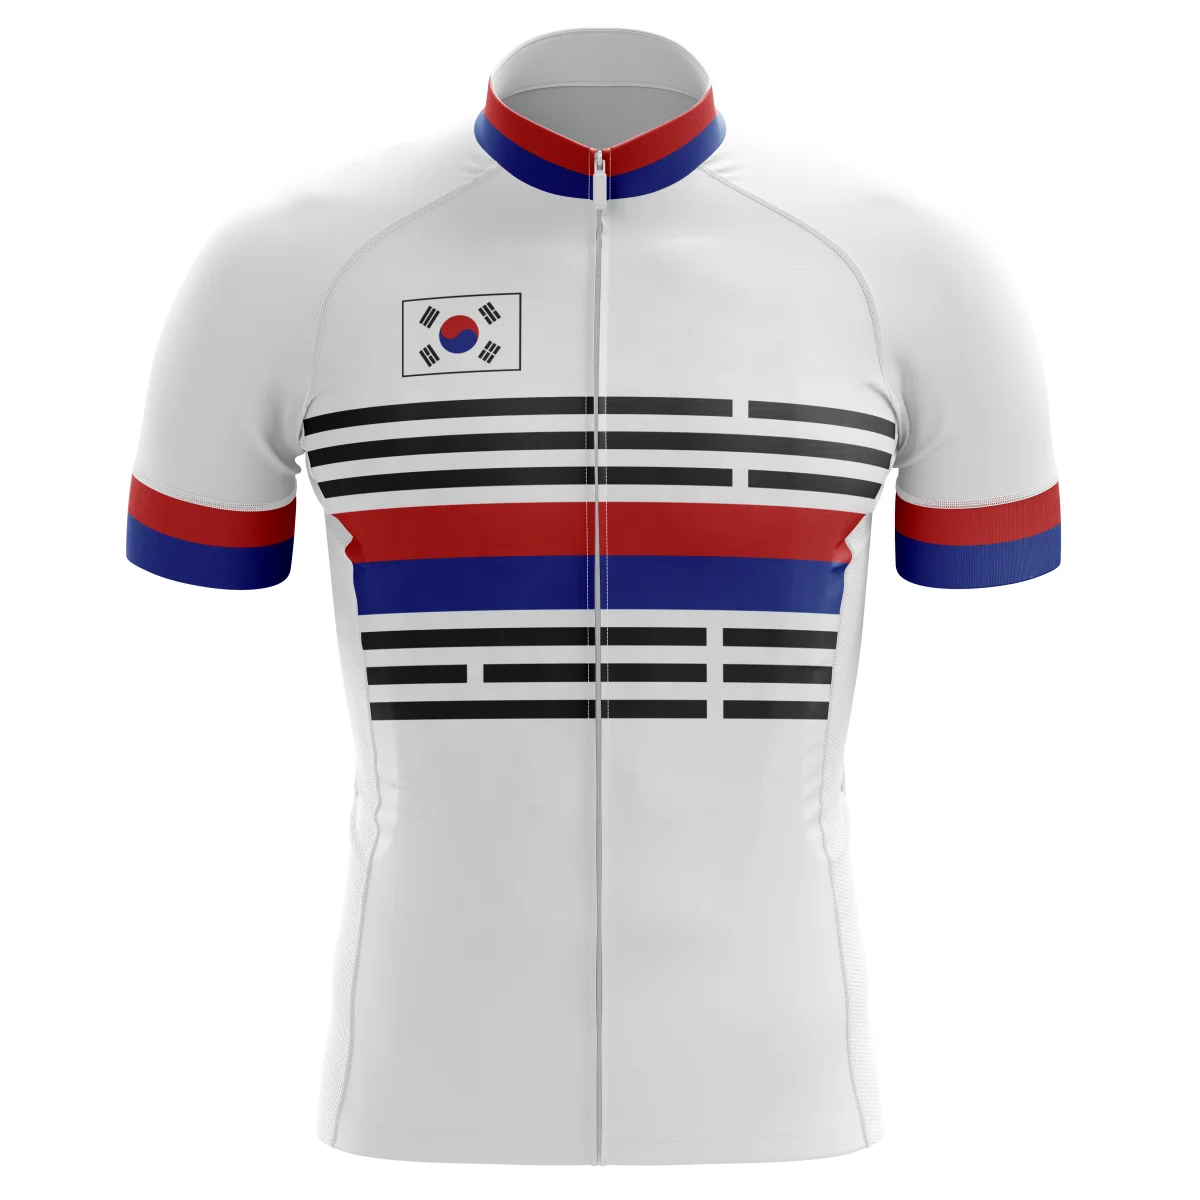 

HIRBGOD TYZ638-01 South Korea flag cycle jersey Men's short sleeve bike jersey Comfortable cycling jersey Plus Size cycling wear, White